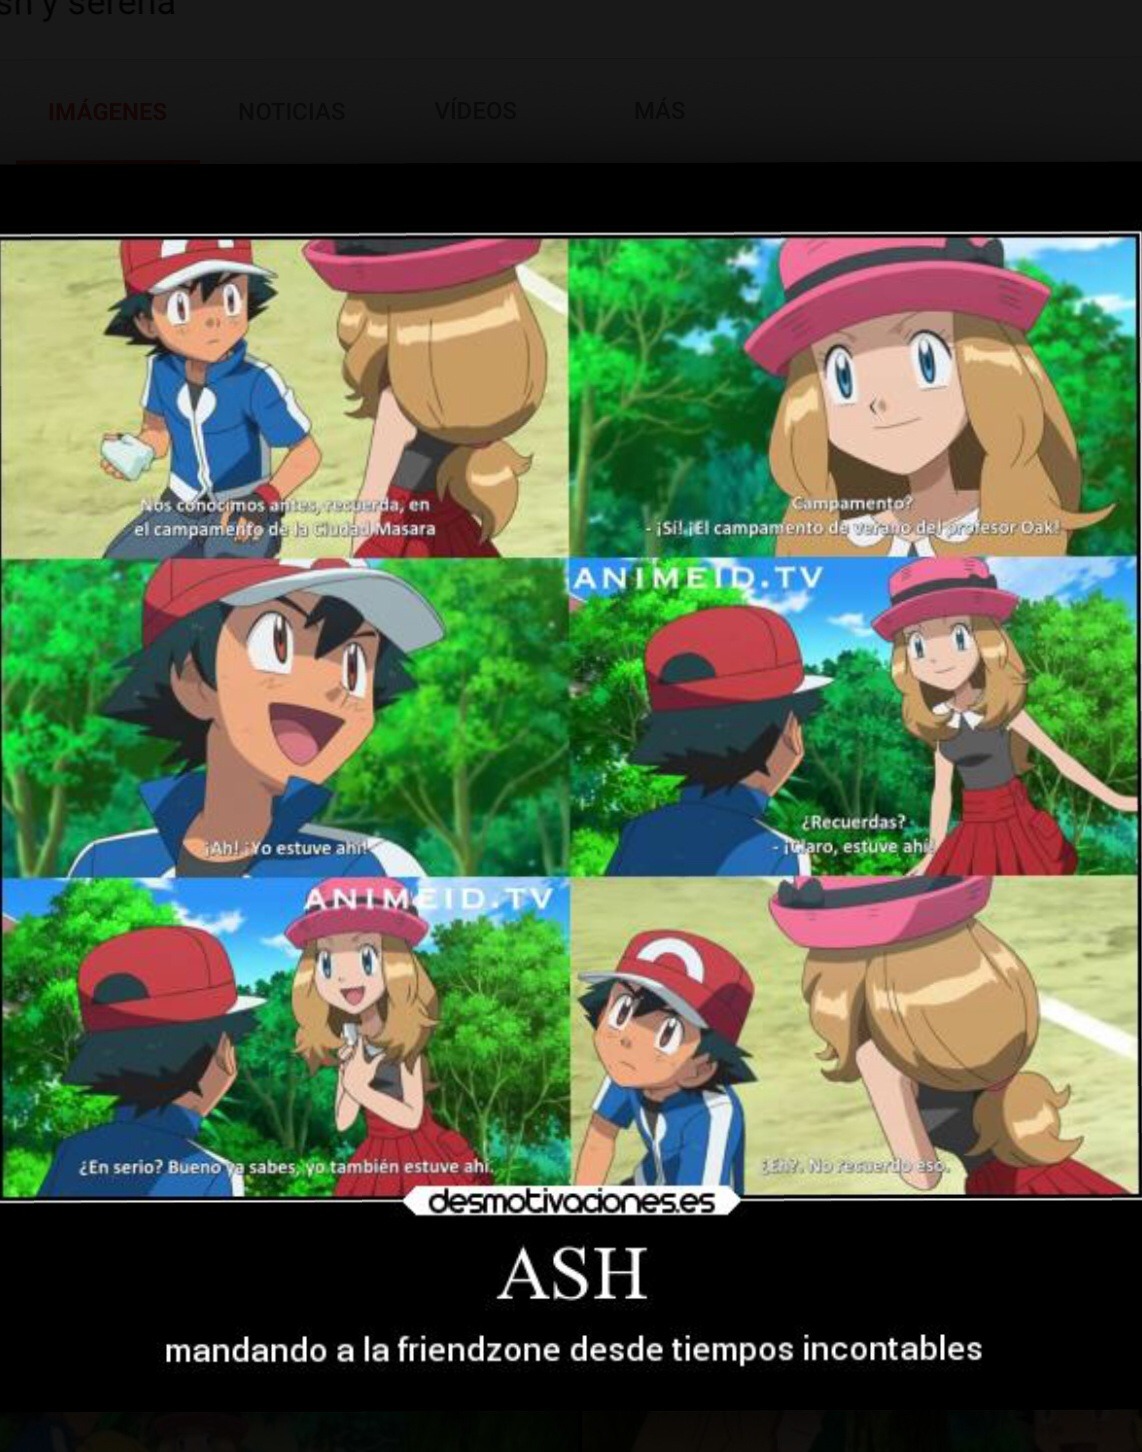 Ese ash es todo un loquillo - meme